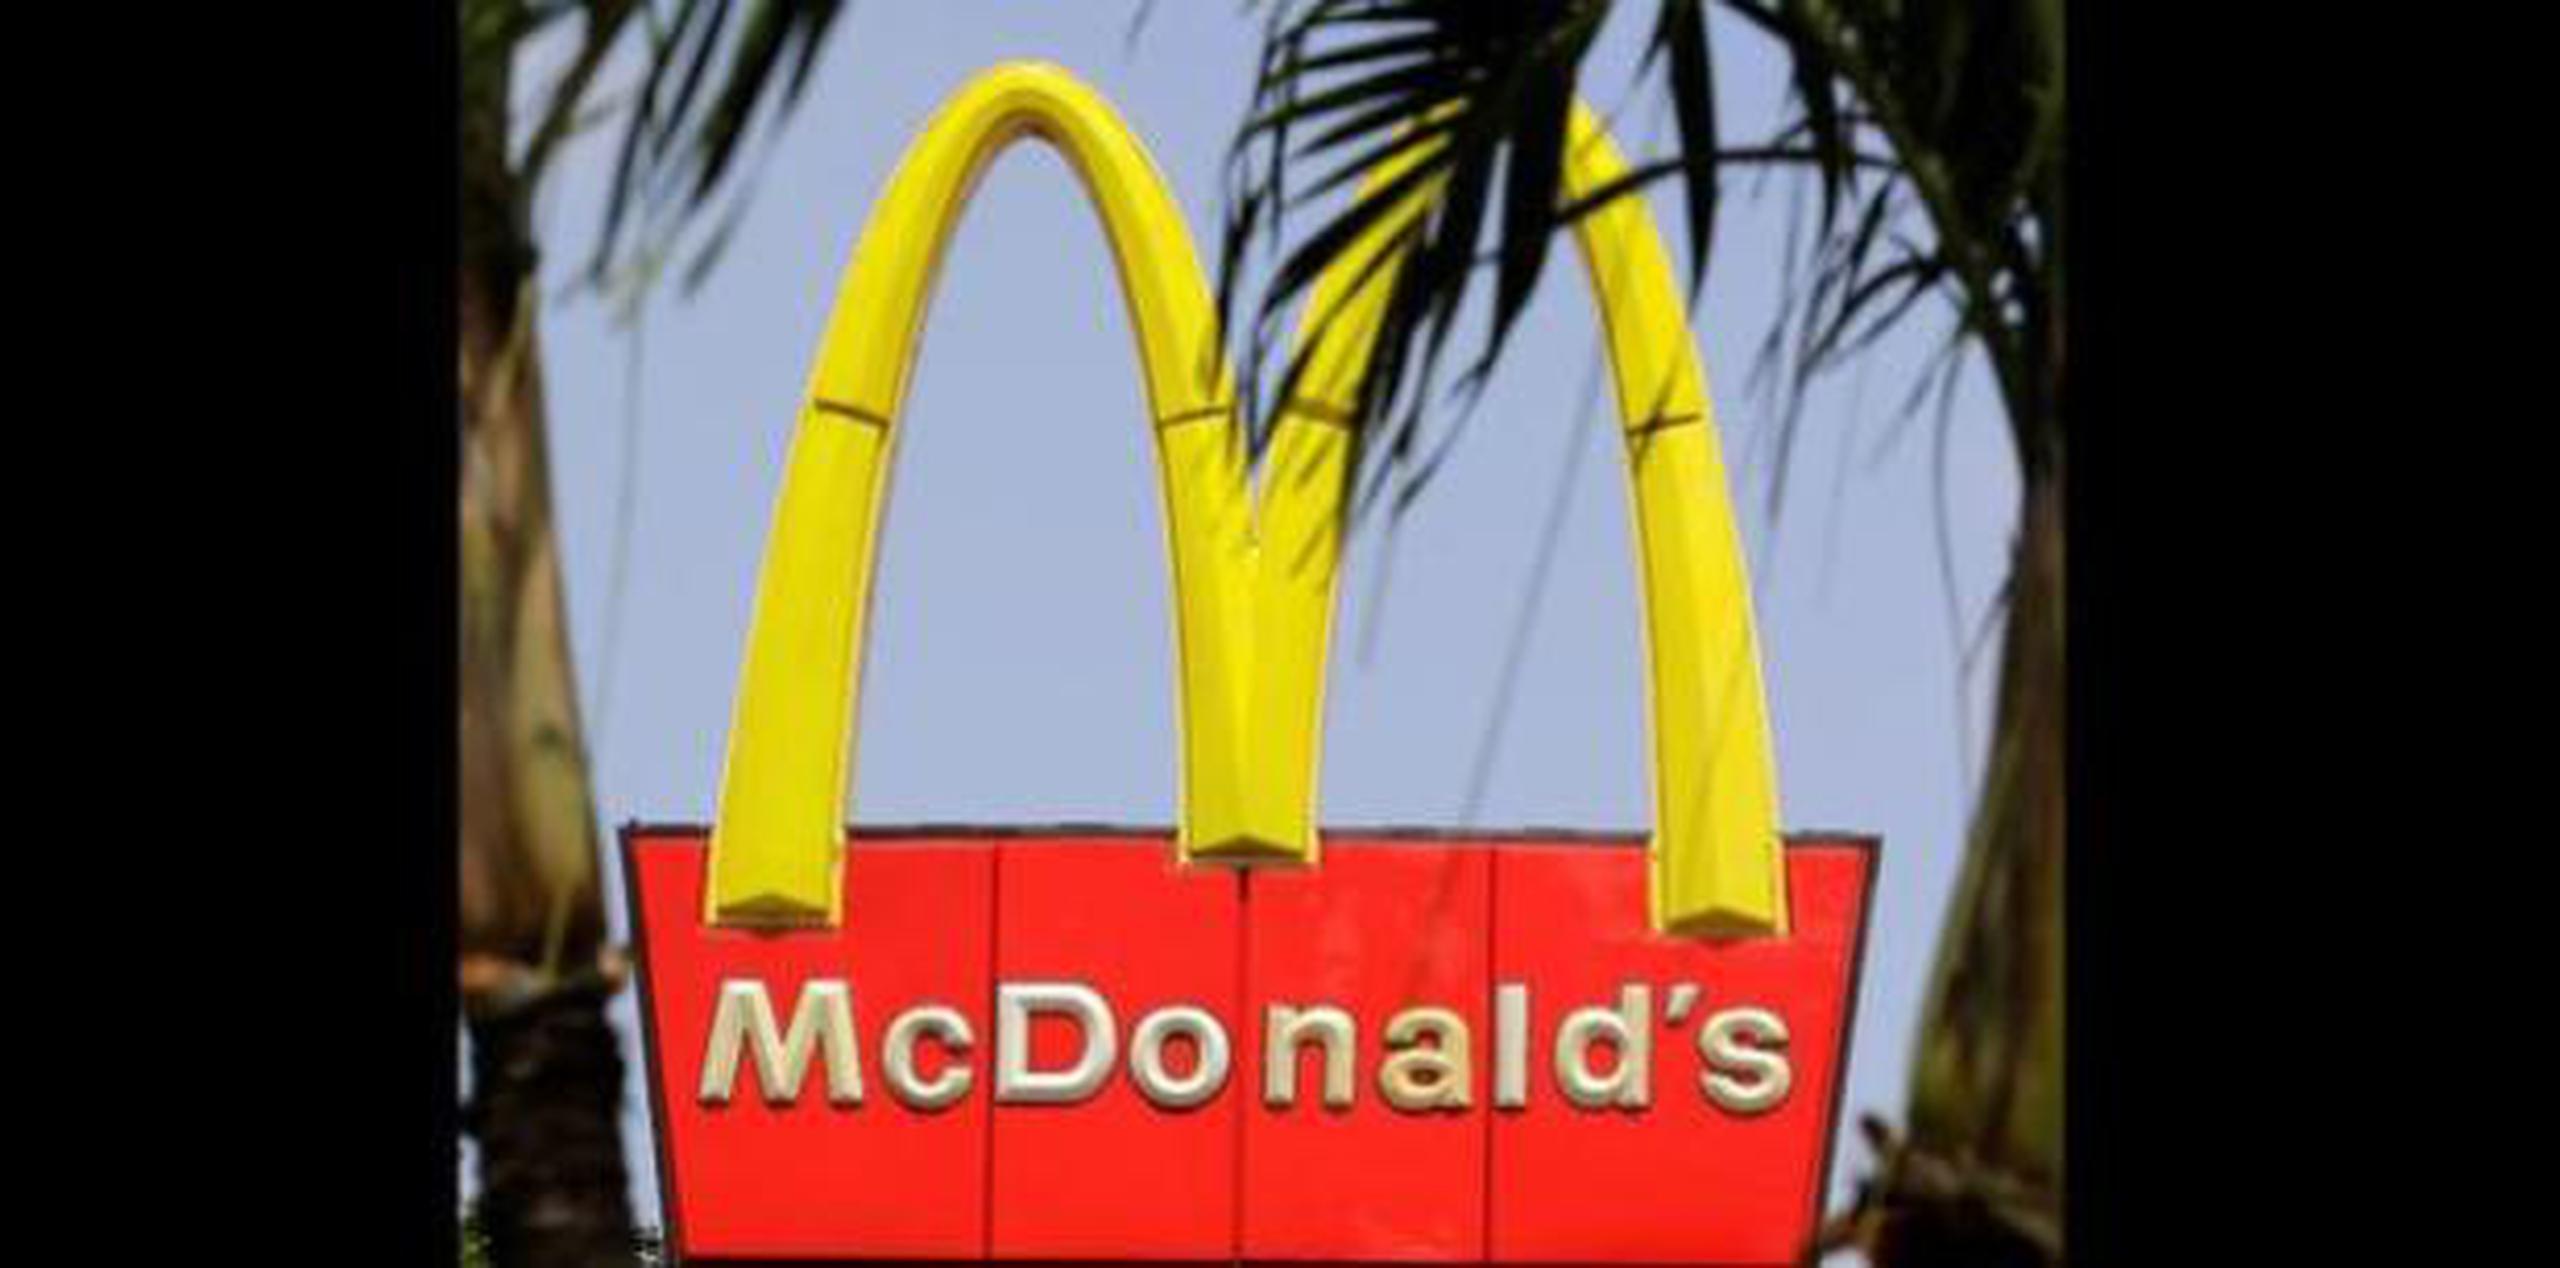 McDonald's arrancará su prueba seis meses después de que Burger King empezó a vender su hamburguesa vegetariana “Impossible”. (Archivo)